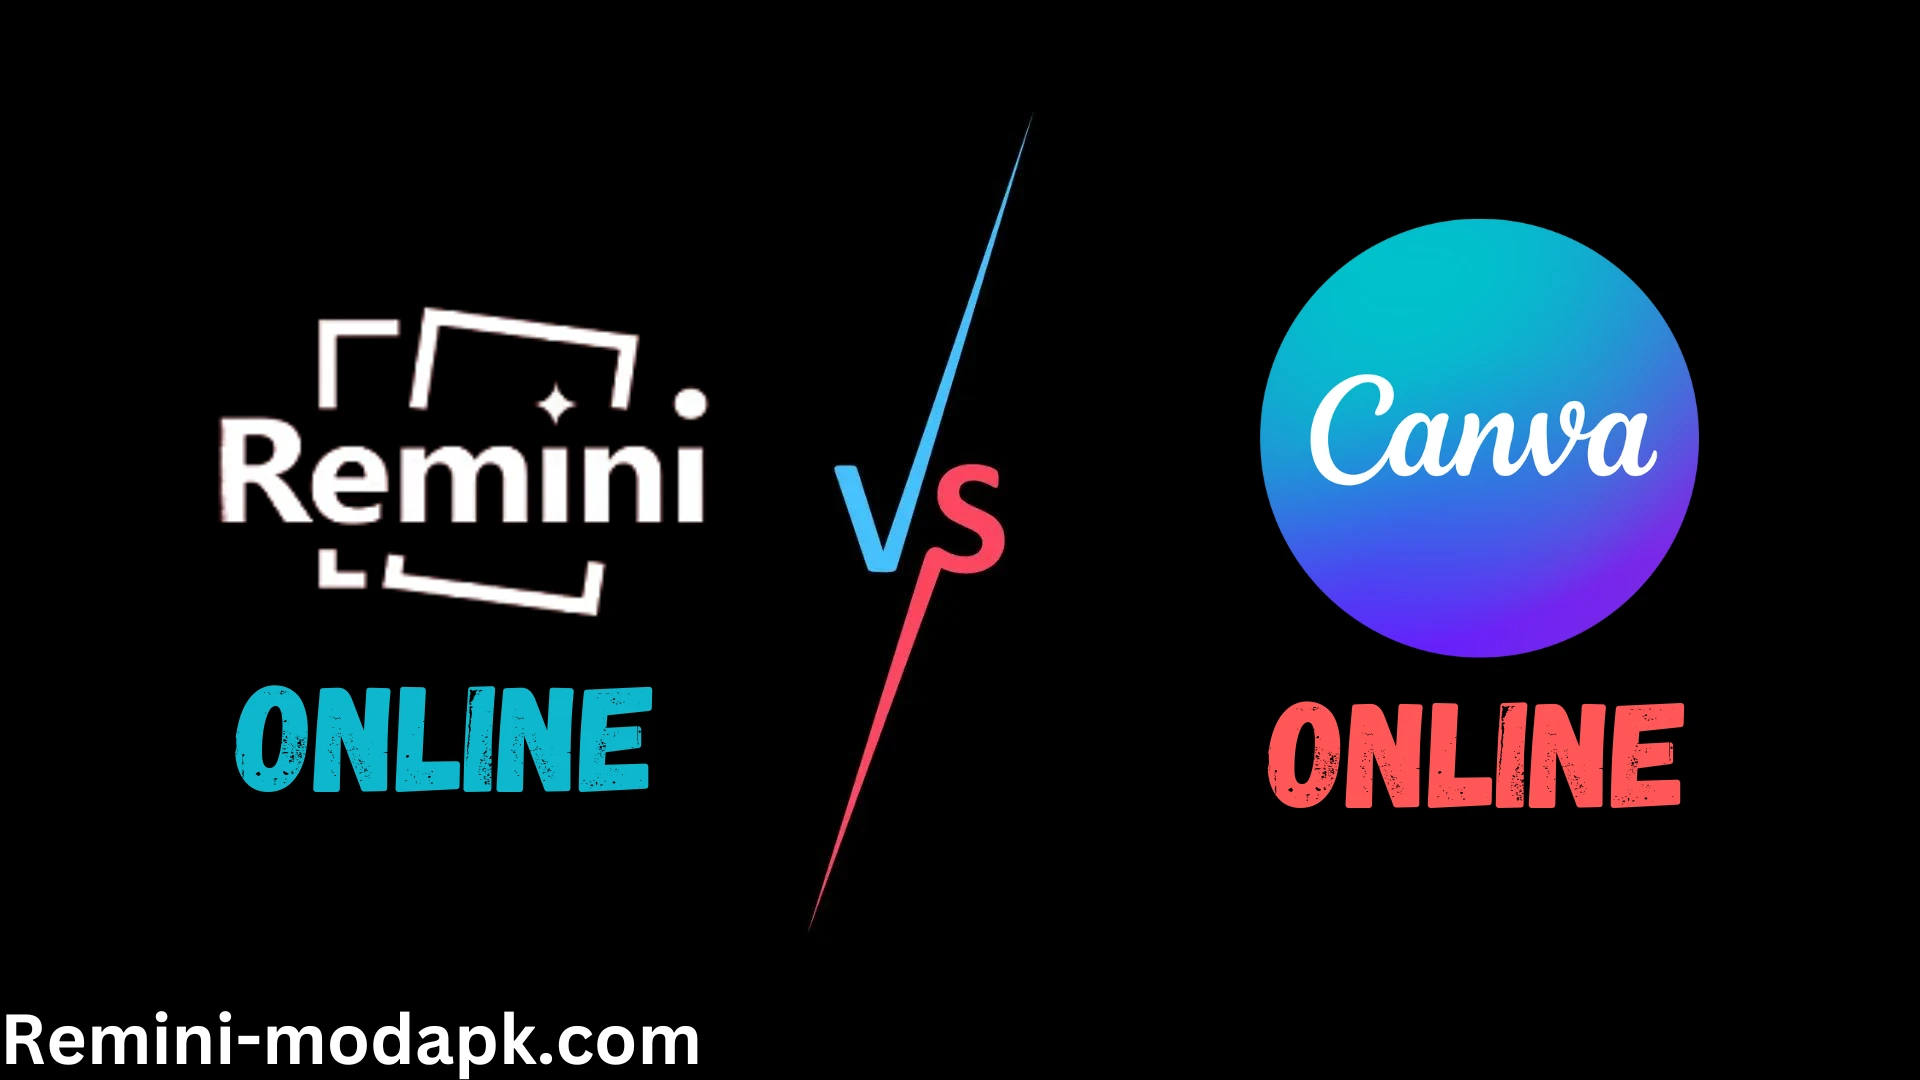 Remini Online VS Canva Online